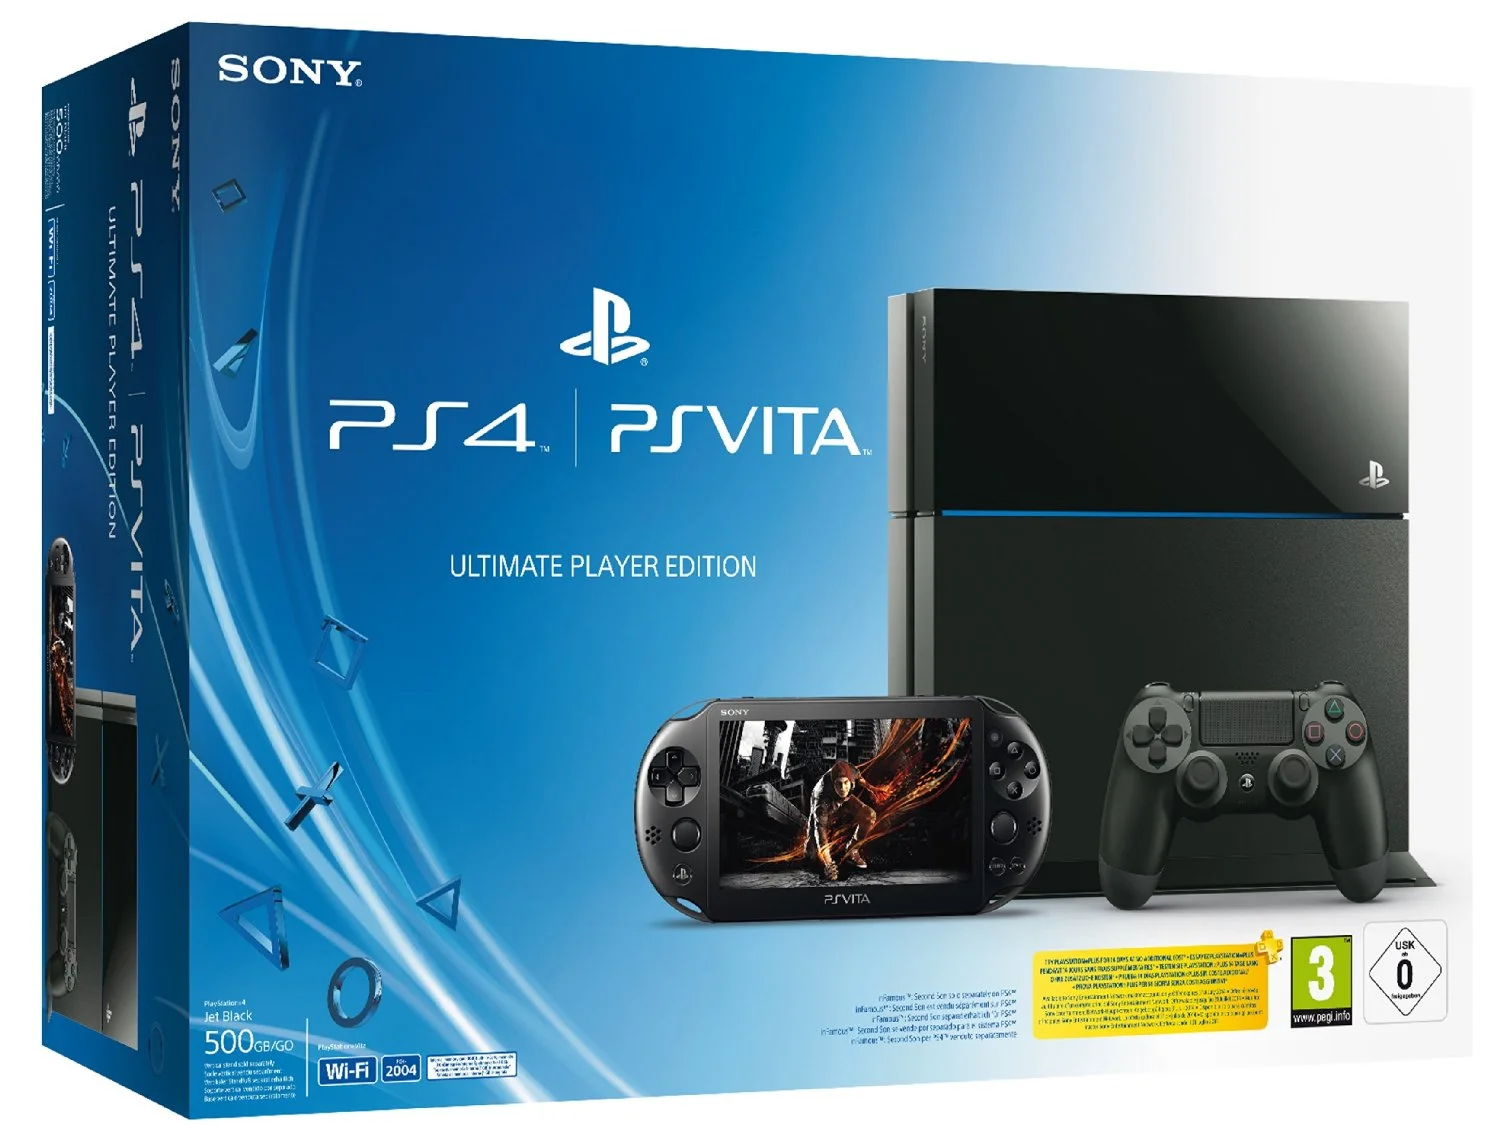  Sony PlayStation 4 + Playstation Vita Slim Ultimate Player Edition